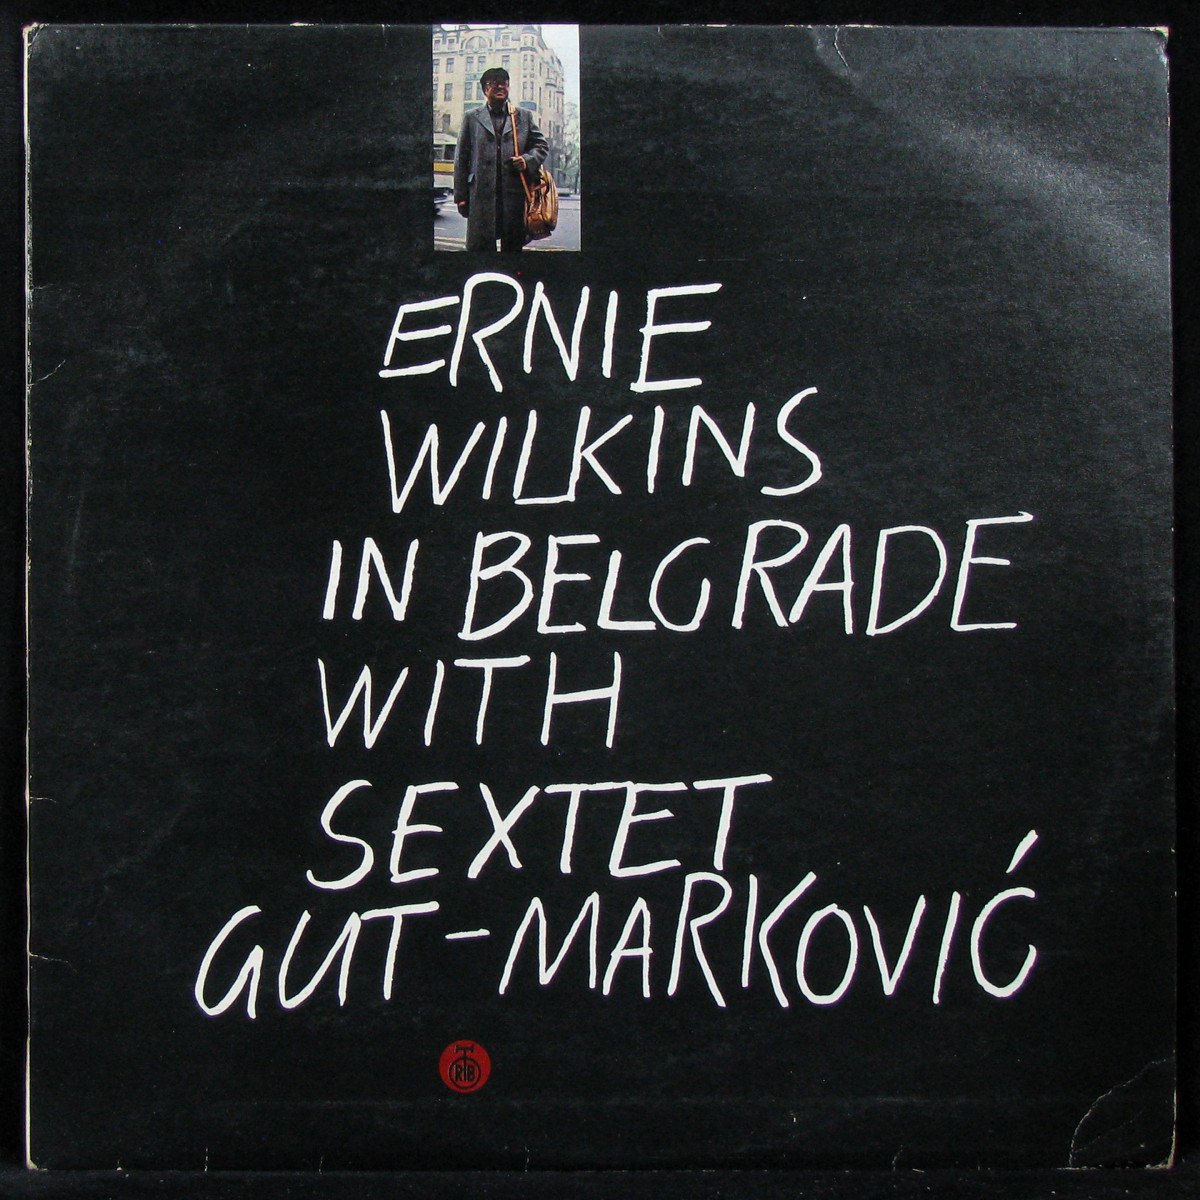 Ernie Wilkins In Belgrade With Sextet Gut-Markovic